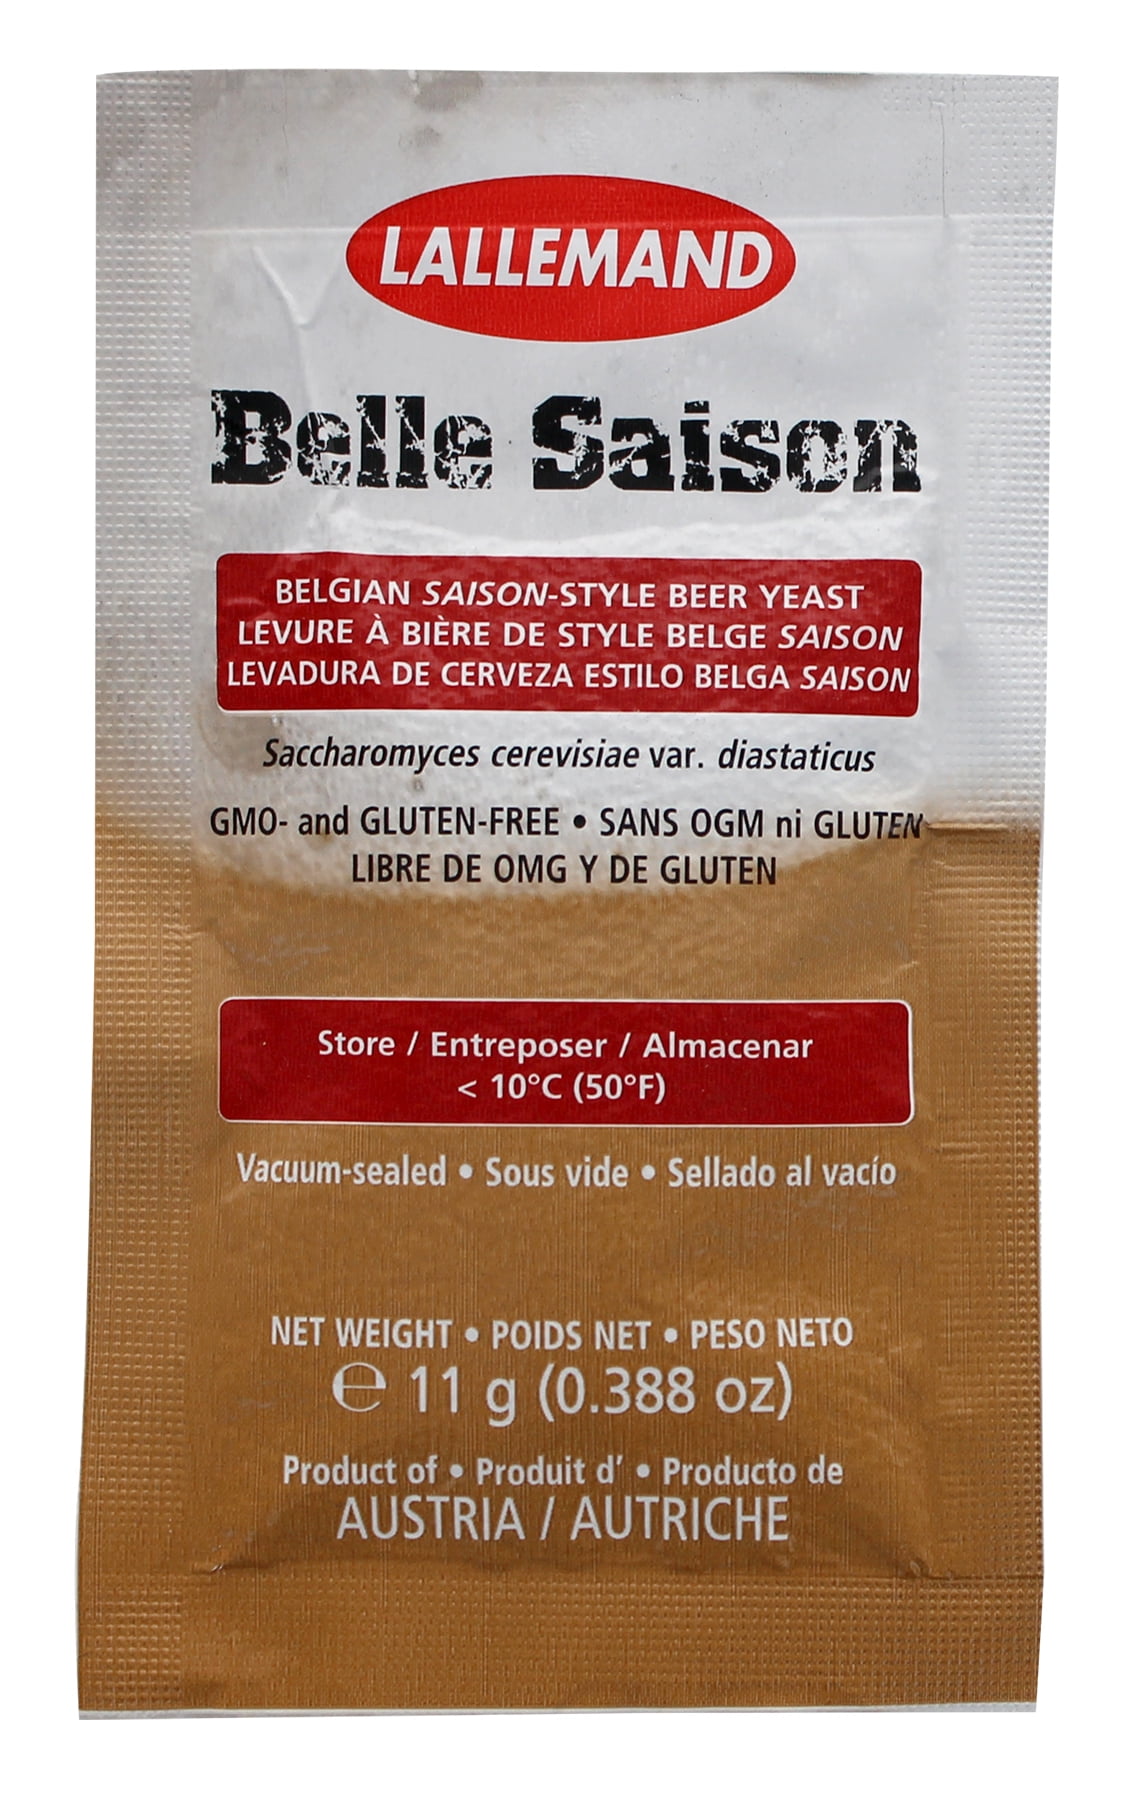 Lallemand Danstar Belle Saison Belgian-Style Ale Brewing Beer Yeast 11g Packet 